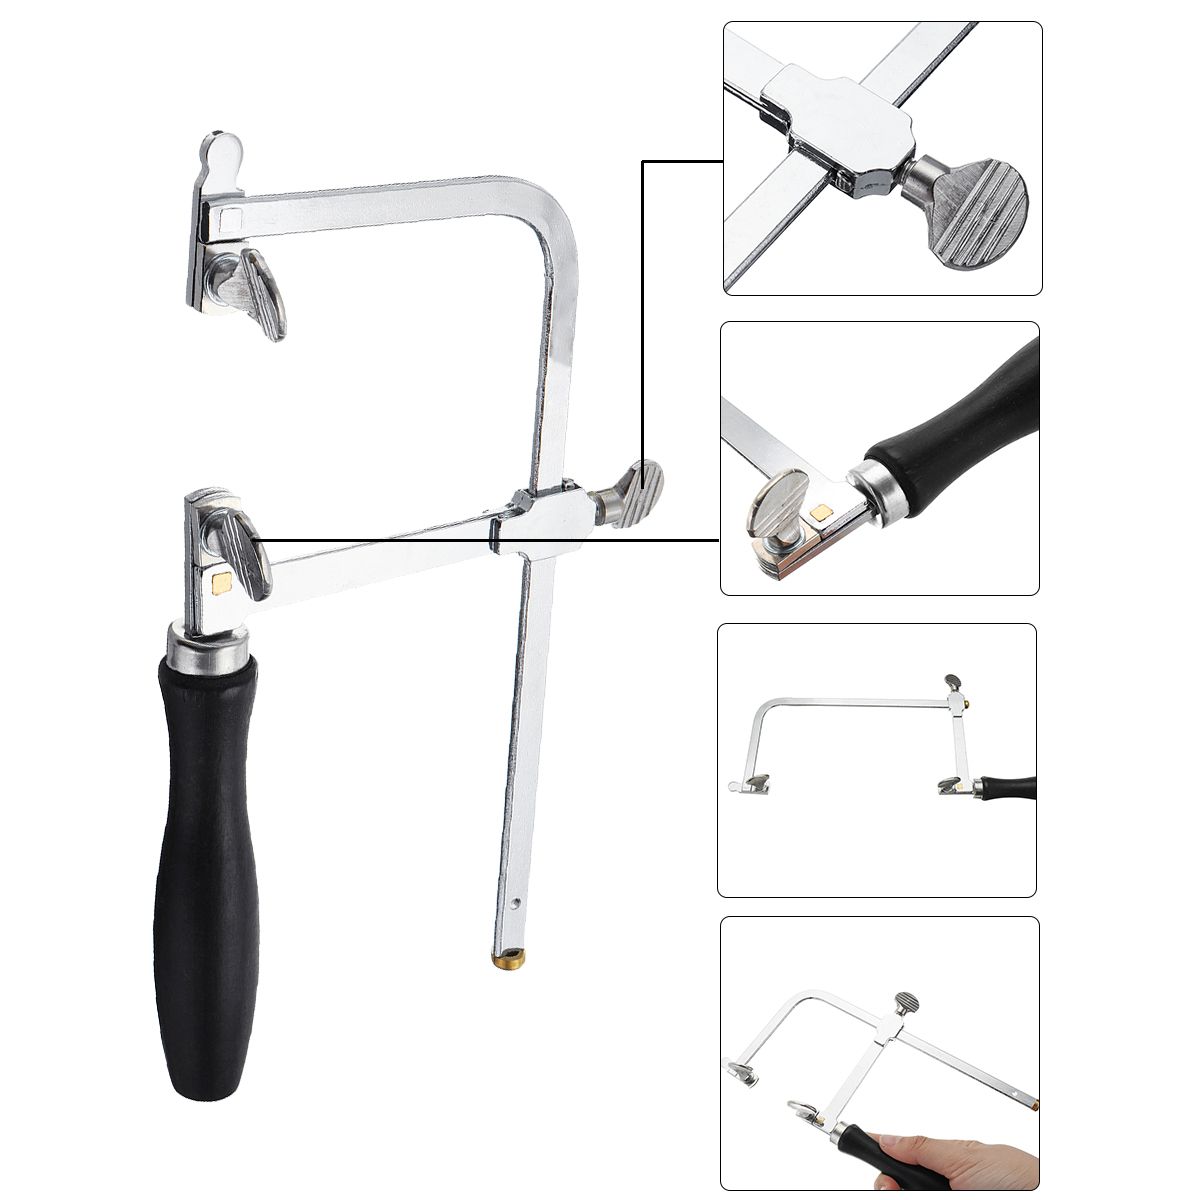 Adjustable-Jewelry-Saws-Frame-DIY-Jeweler-Making-Repair-Tool-with-Blade-1417335